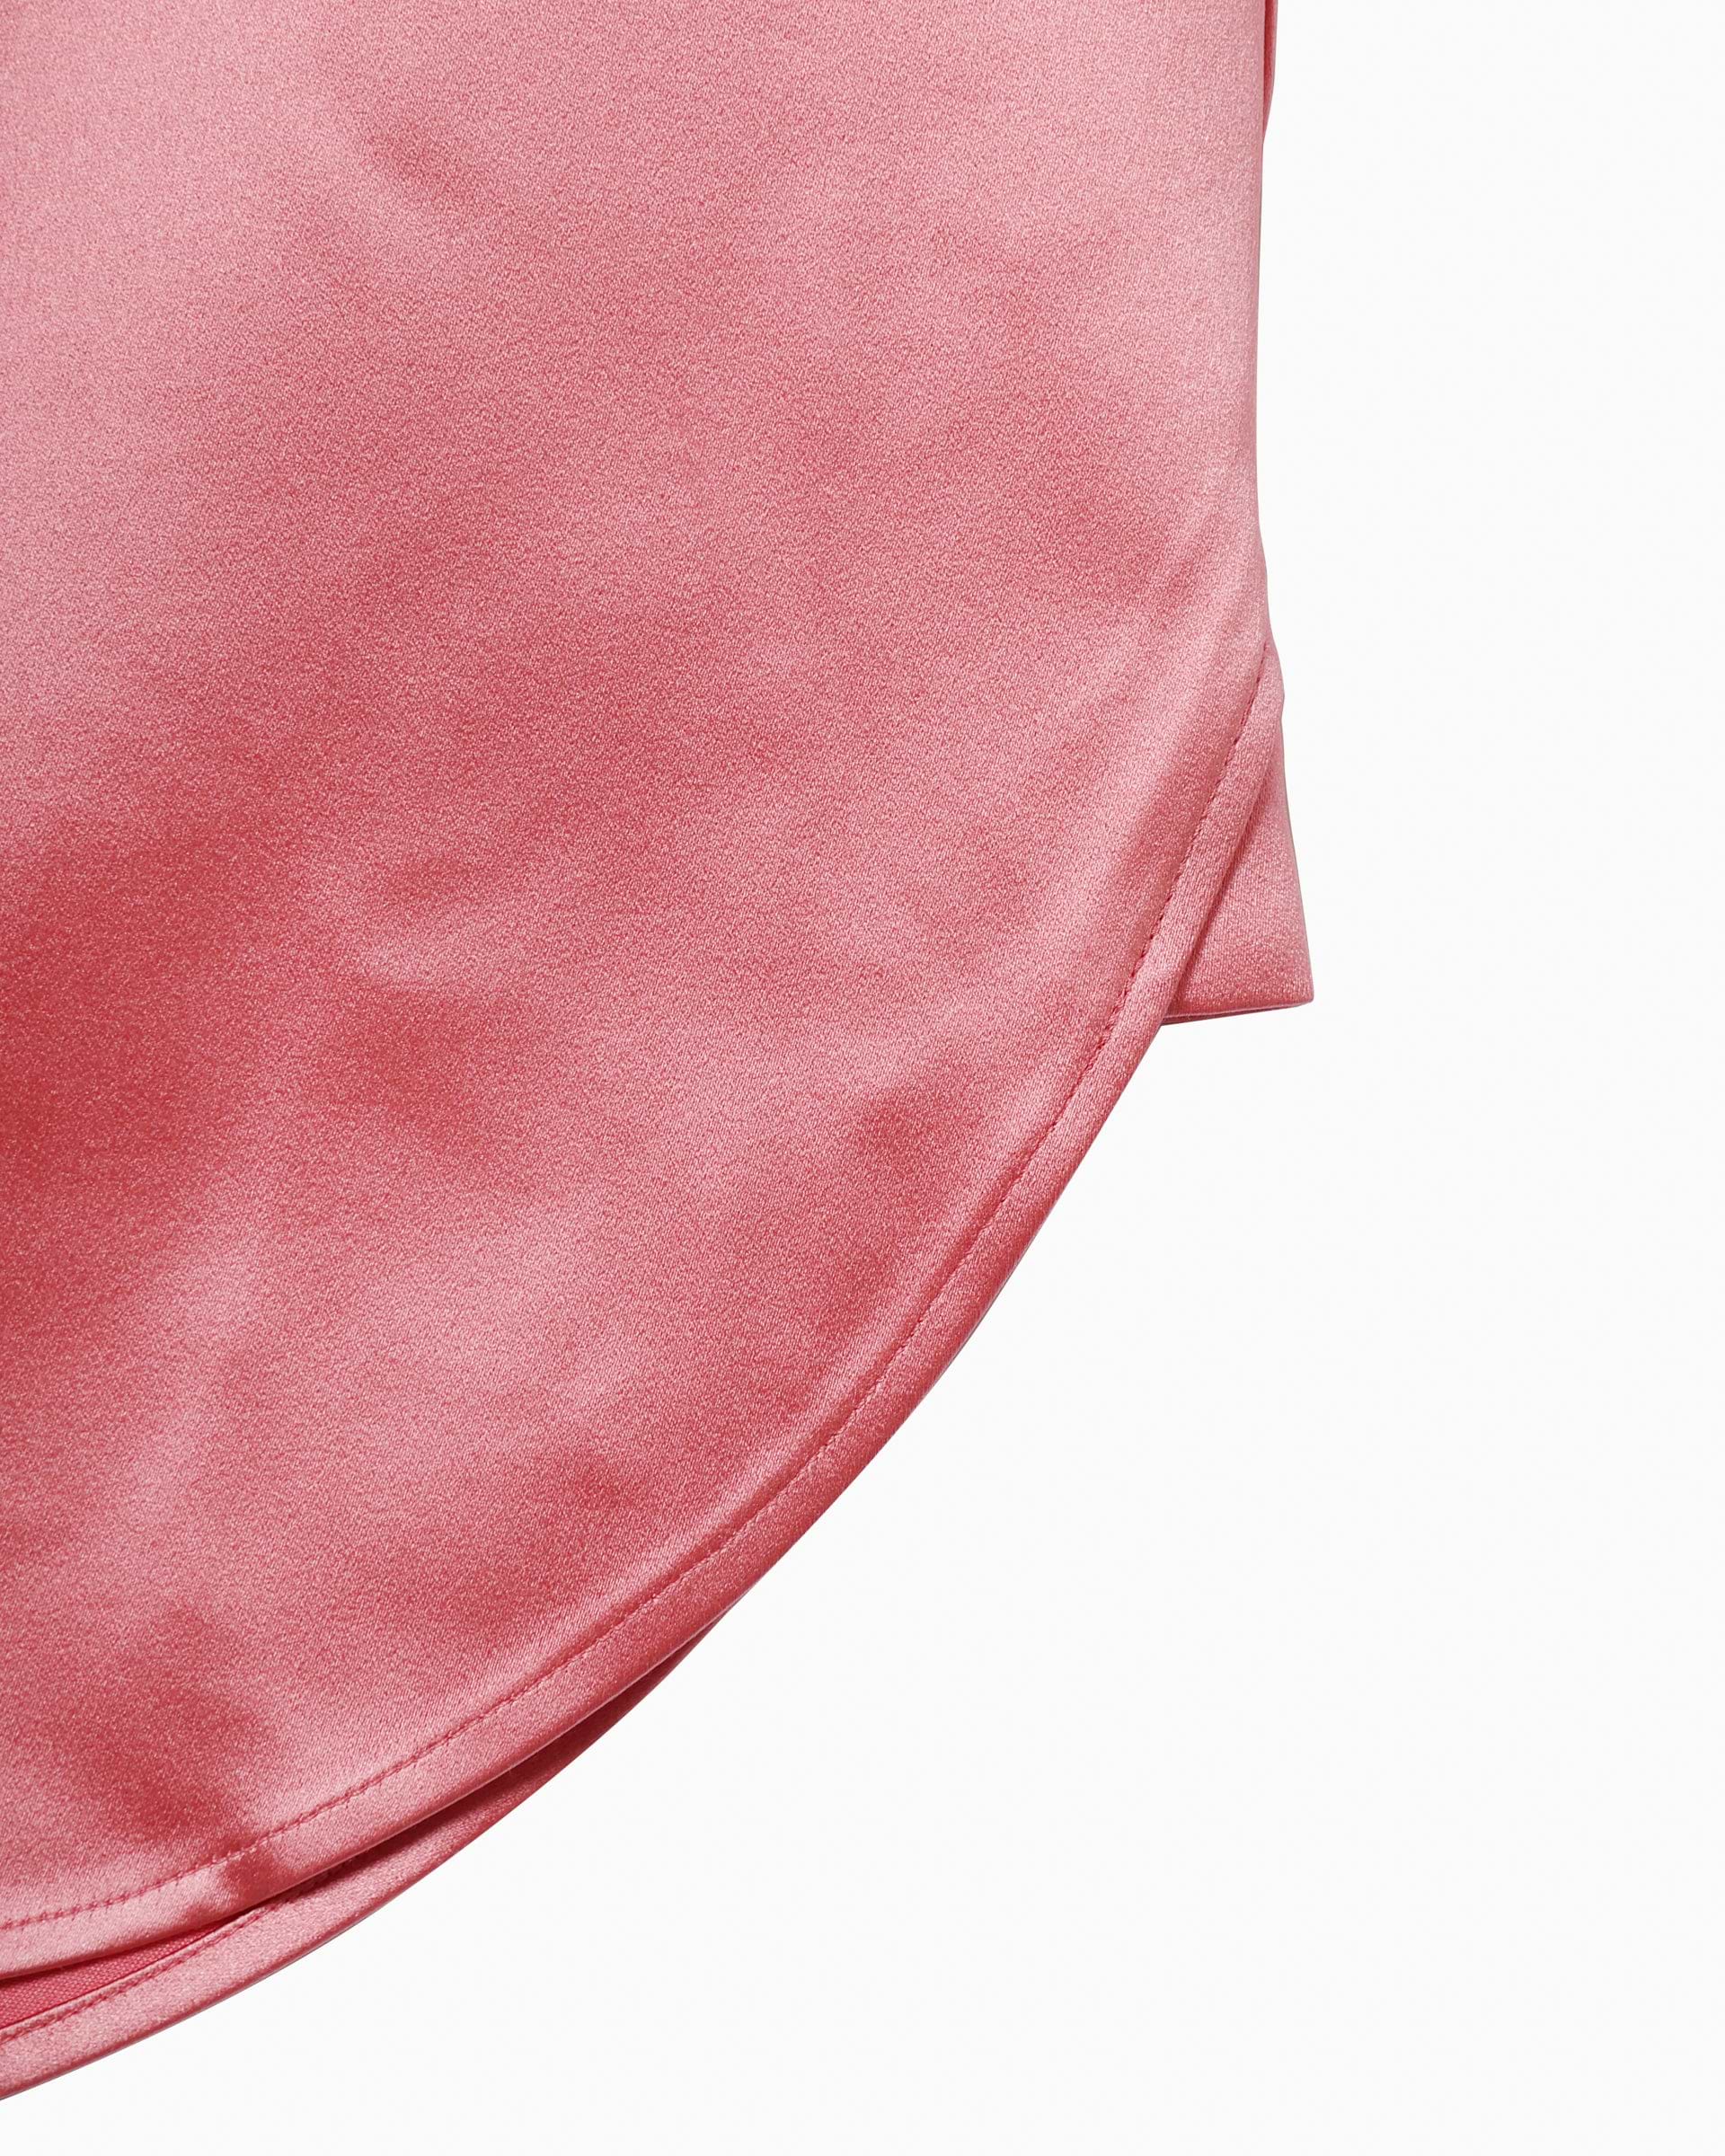 OUAT】オフィスシャツ（ピンク） – ファッションスナップストア